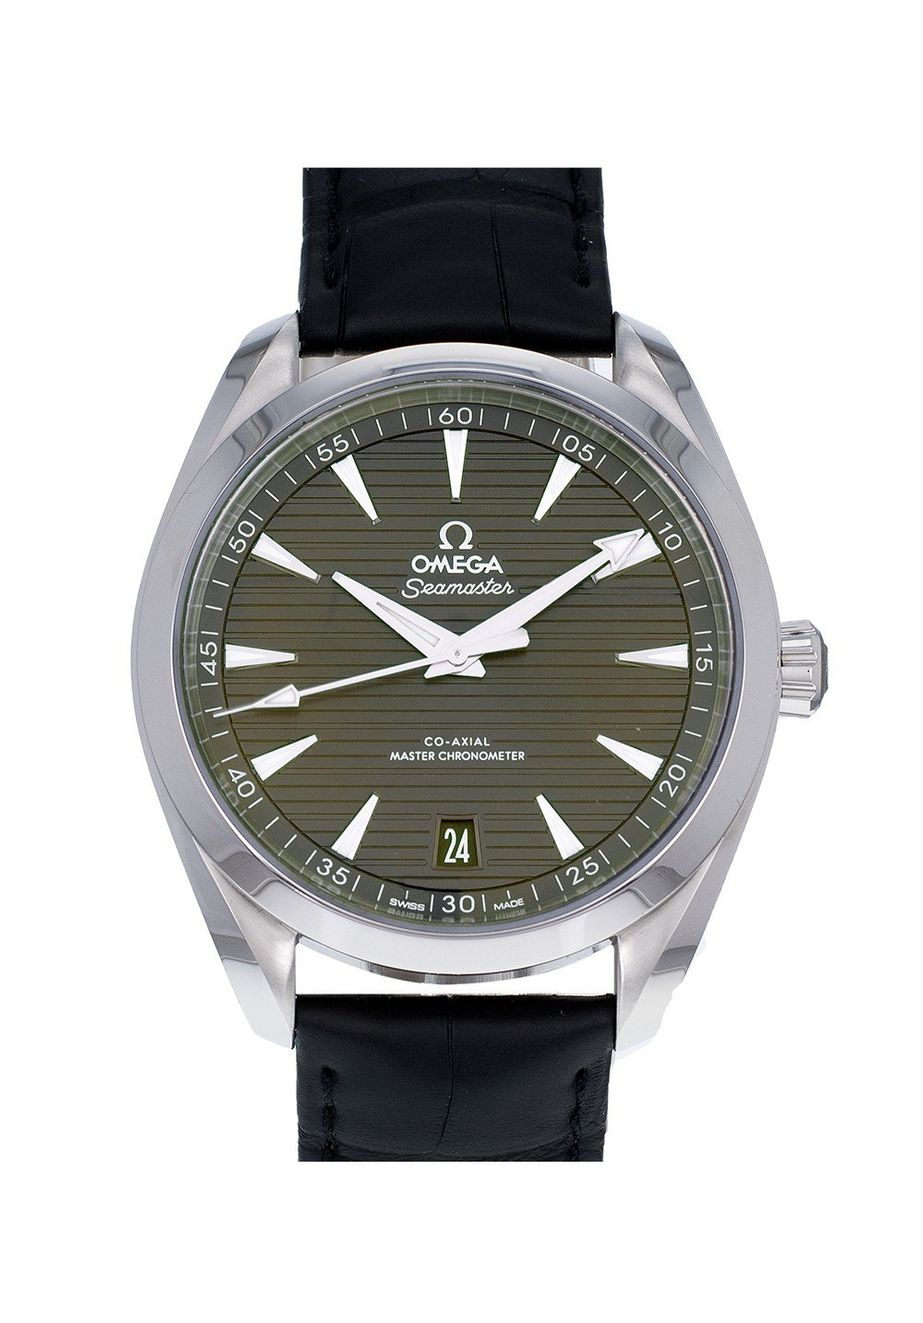 OMEGA Seamaster Aquaterra Co-Axial Master Chronometer